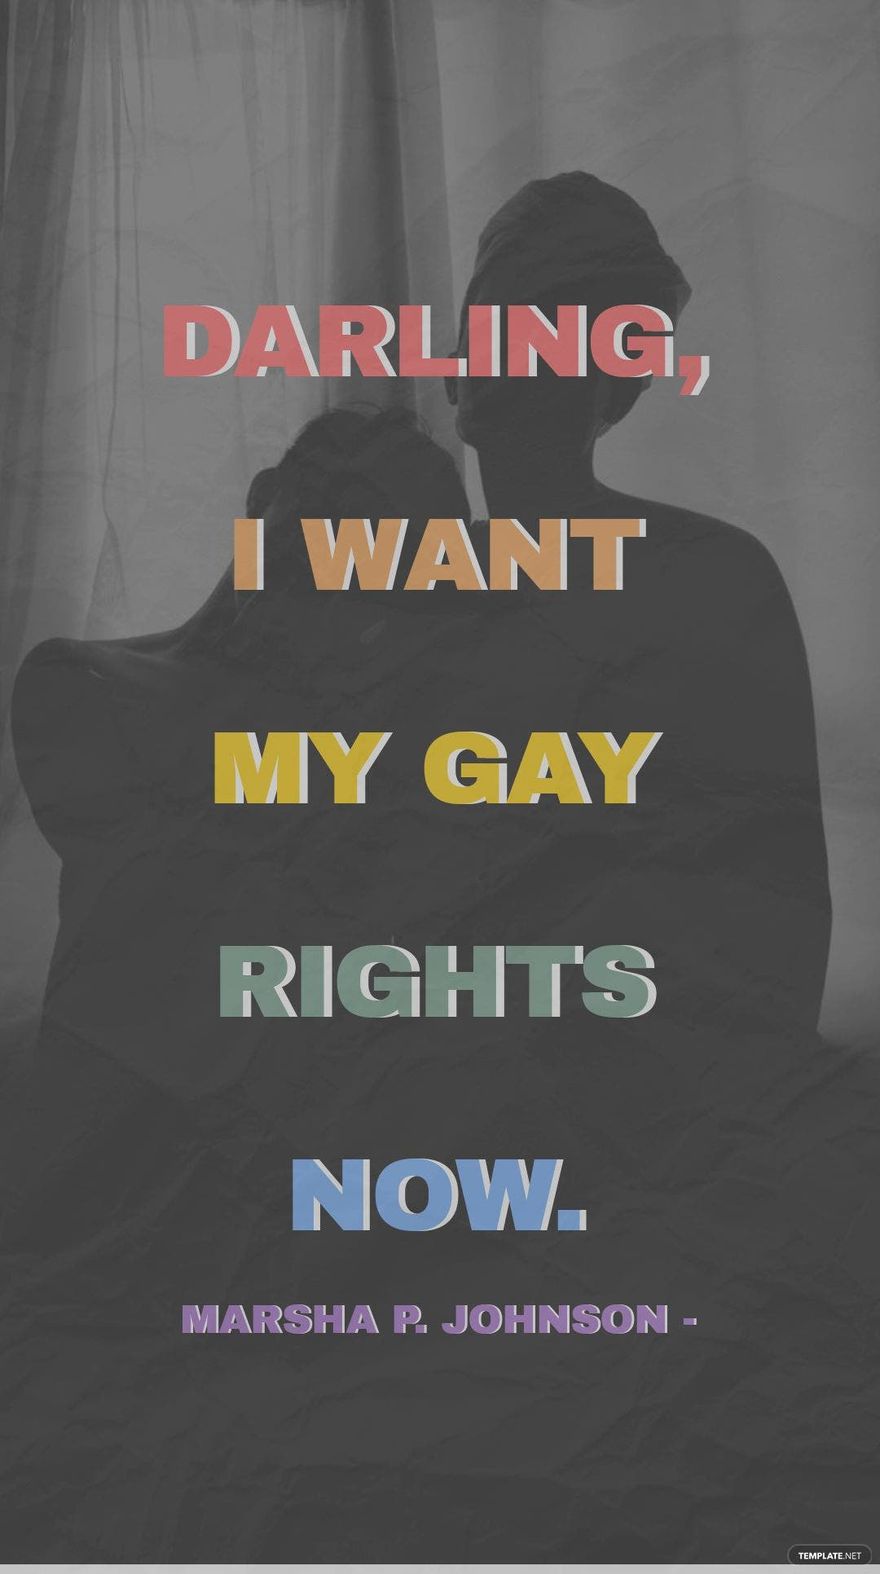 Marsha P. Johnson - Darling, I want my gay rights now.